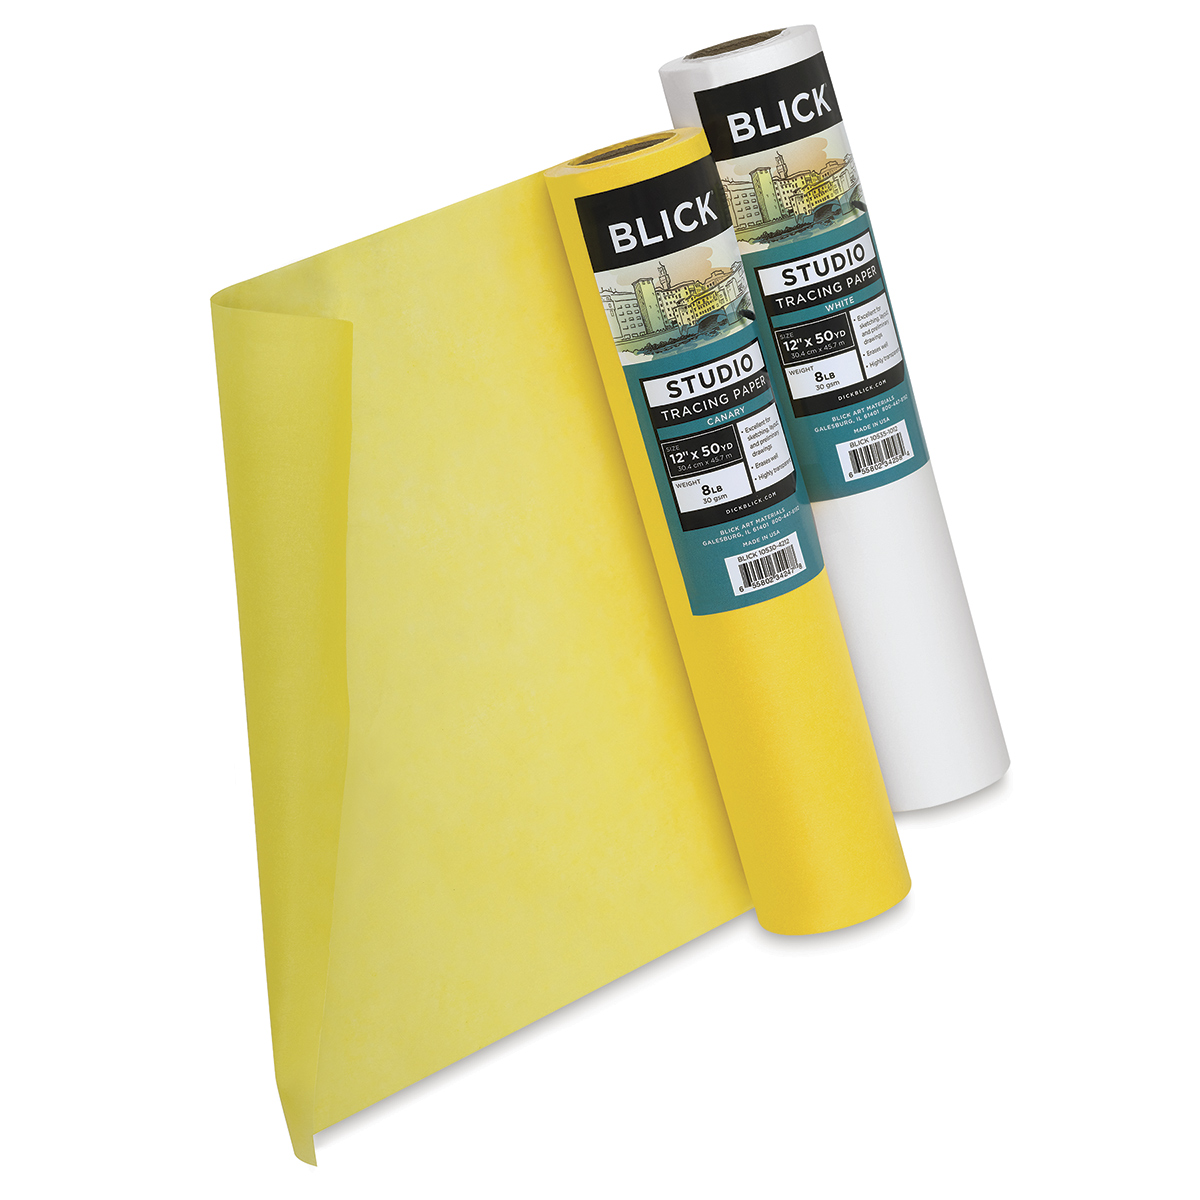 Blick Studio Tracing Paper Rolls